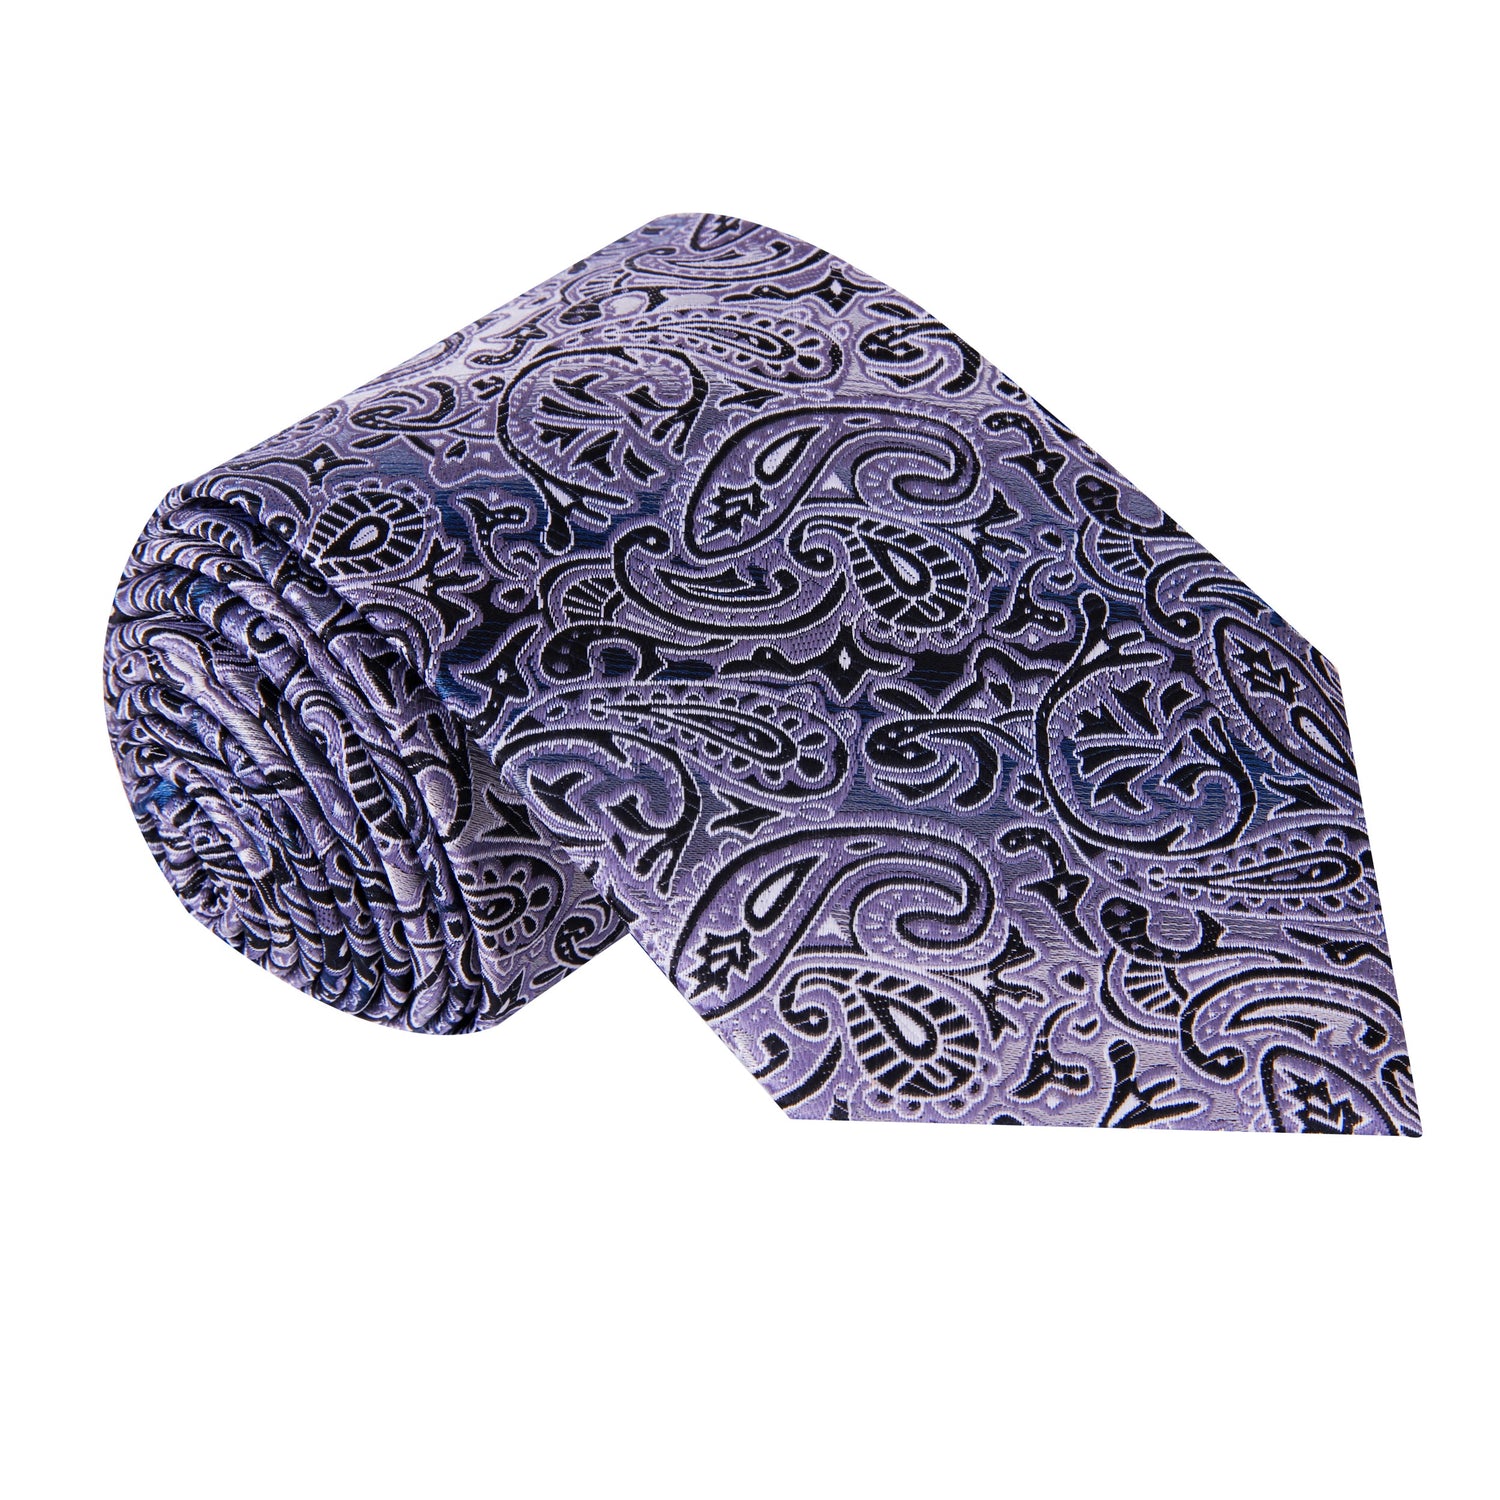 A Black, Grey Paisley Pattern Silk Necktie